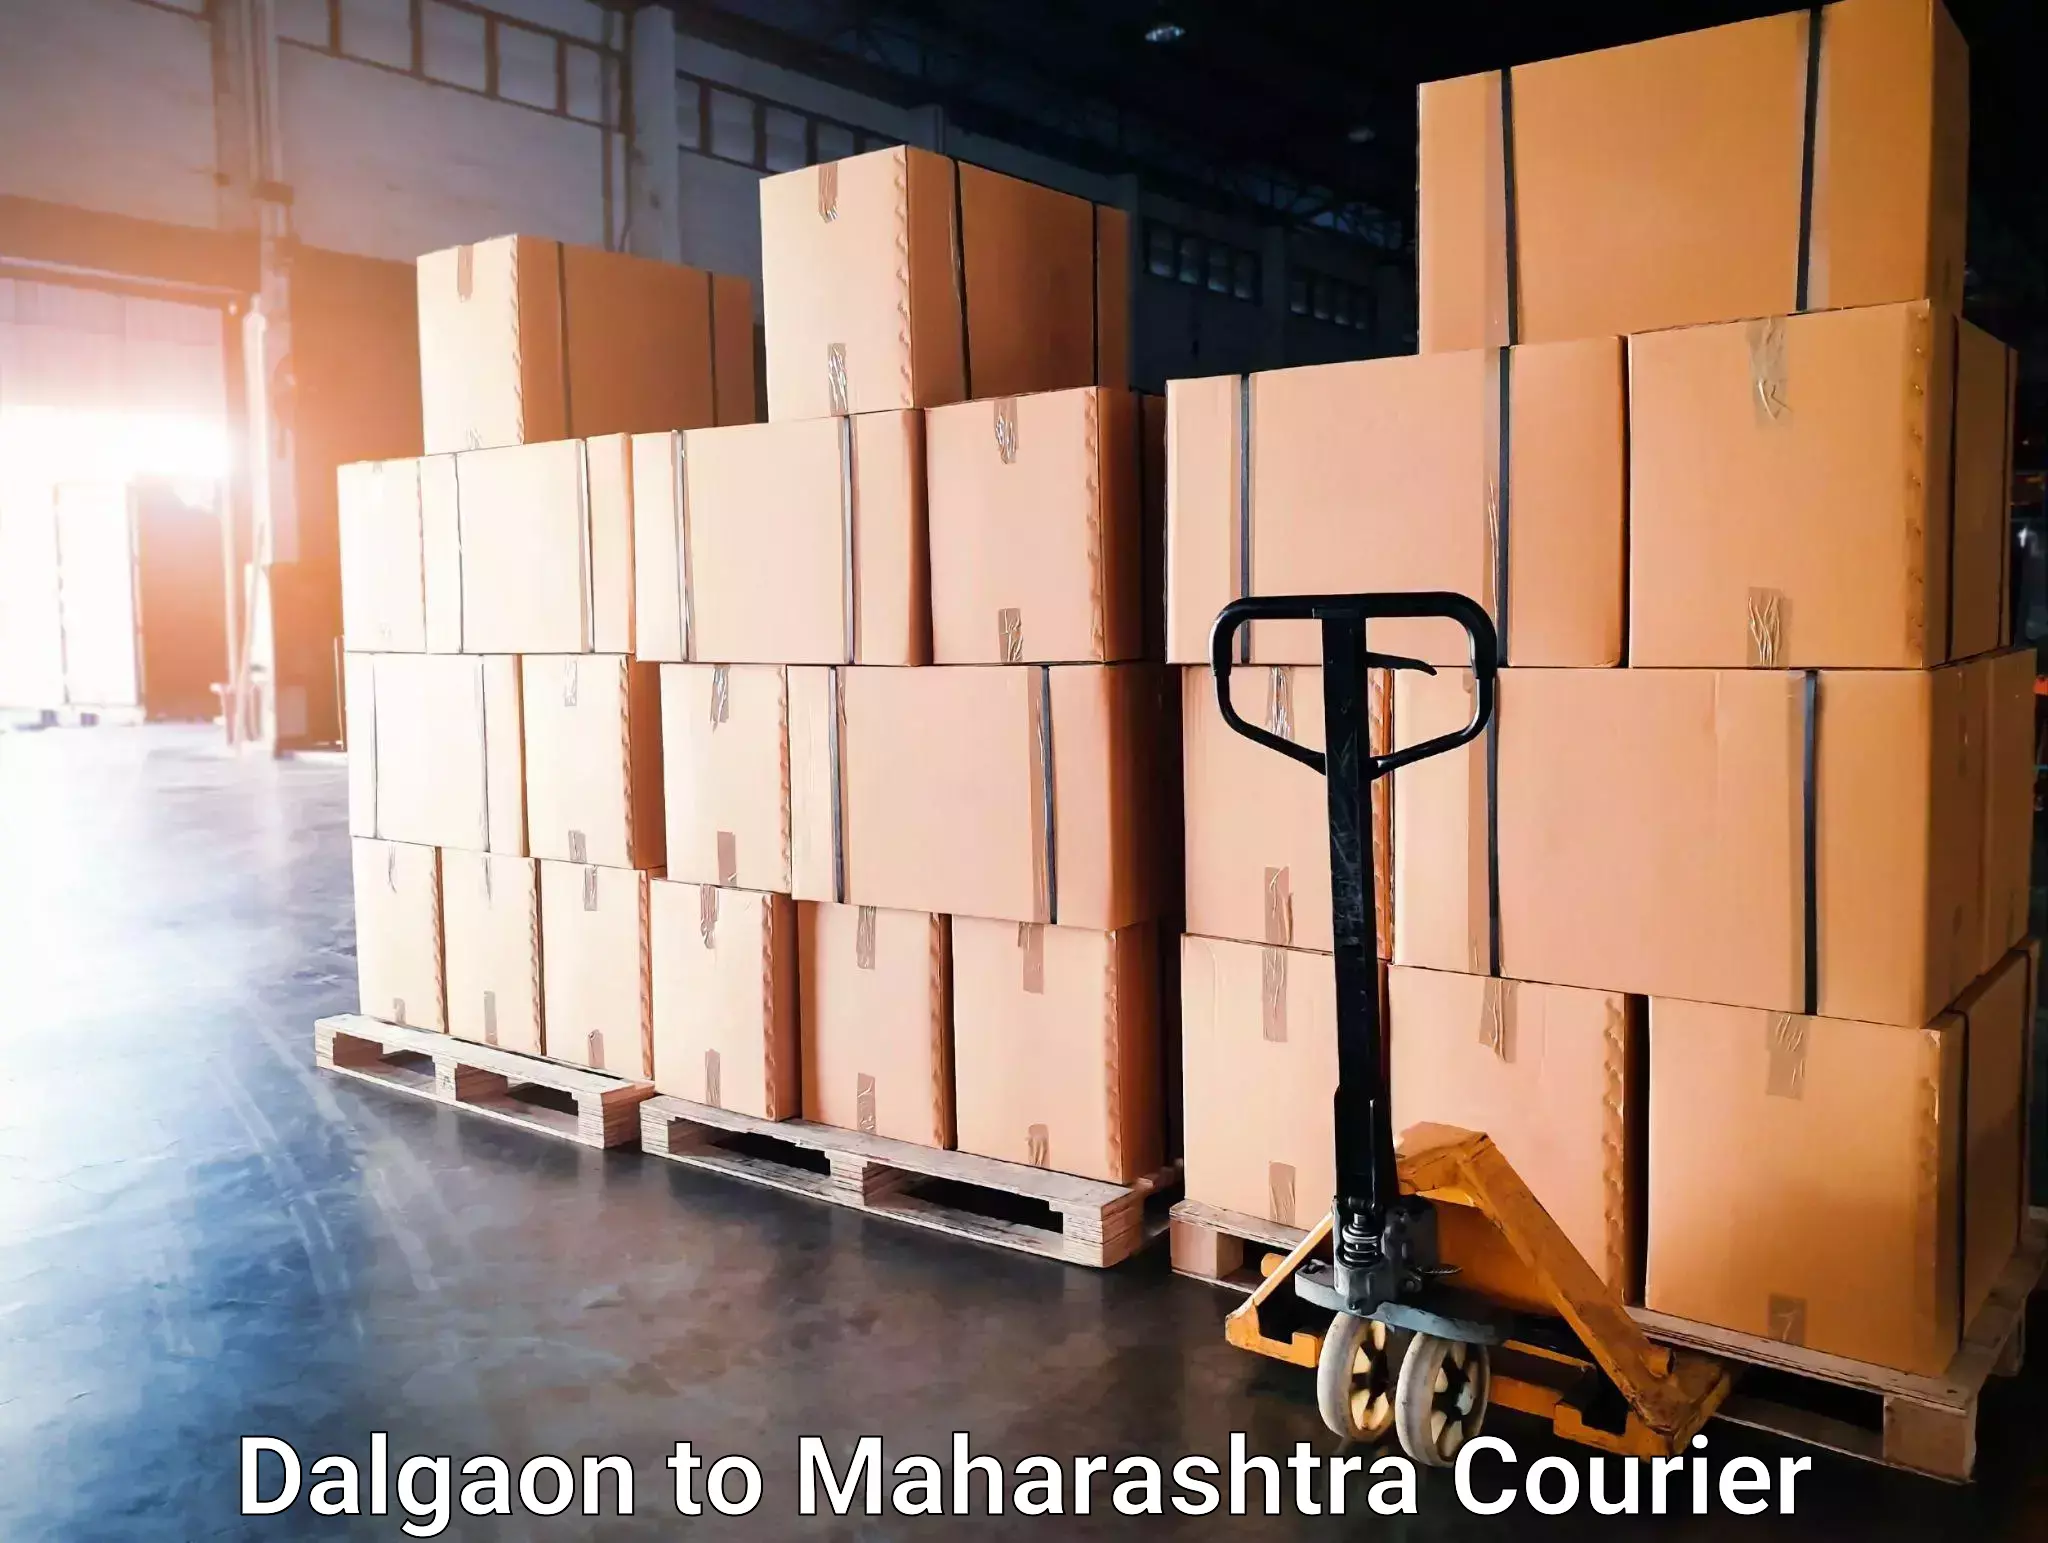 Courier service comparison Dalgaon to Khandala Pune